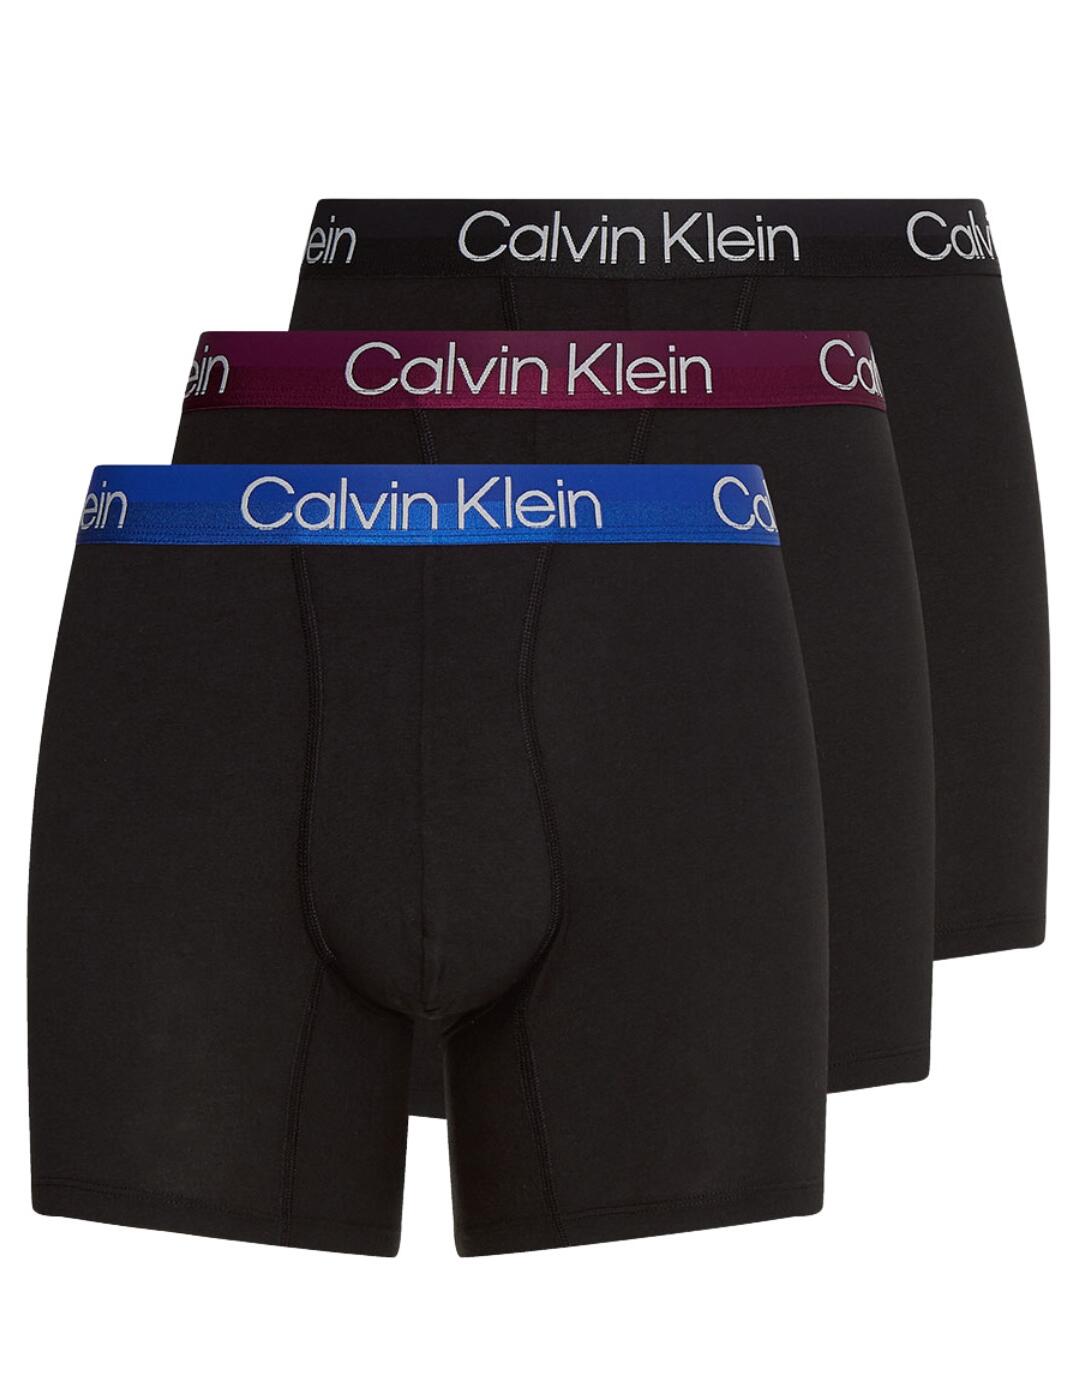 Calvin Klein Mens Modern Structure Boxer Briefs 3 Pack - Belle Lingerie